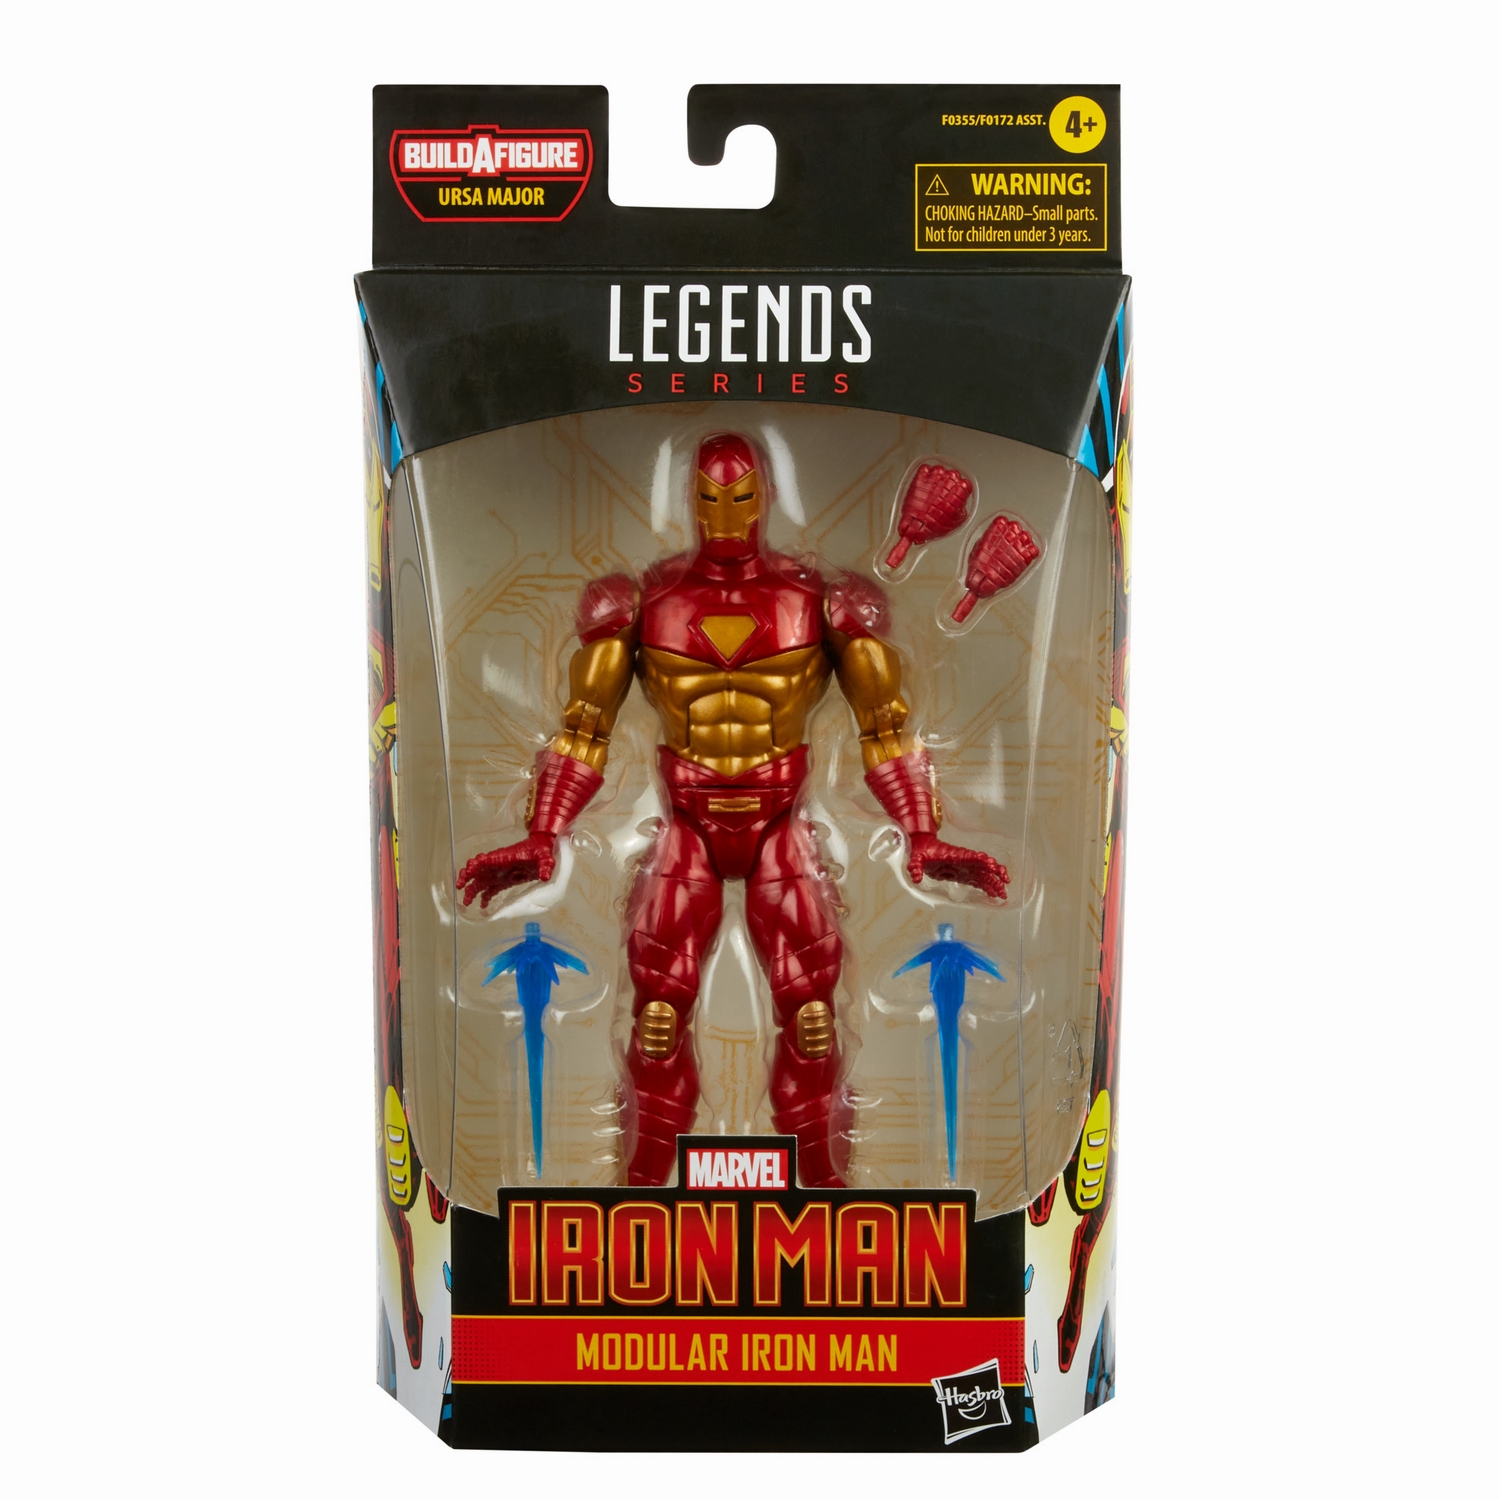 MARVEL LEGENDS SERIES 6-INCH IRON MAN Figure Assortment - Modular Iron Man - in pck.jpg